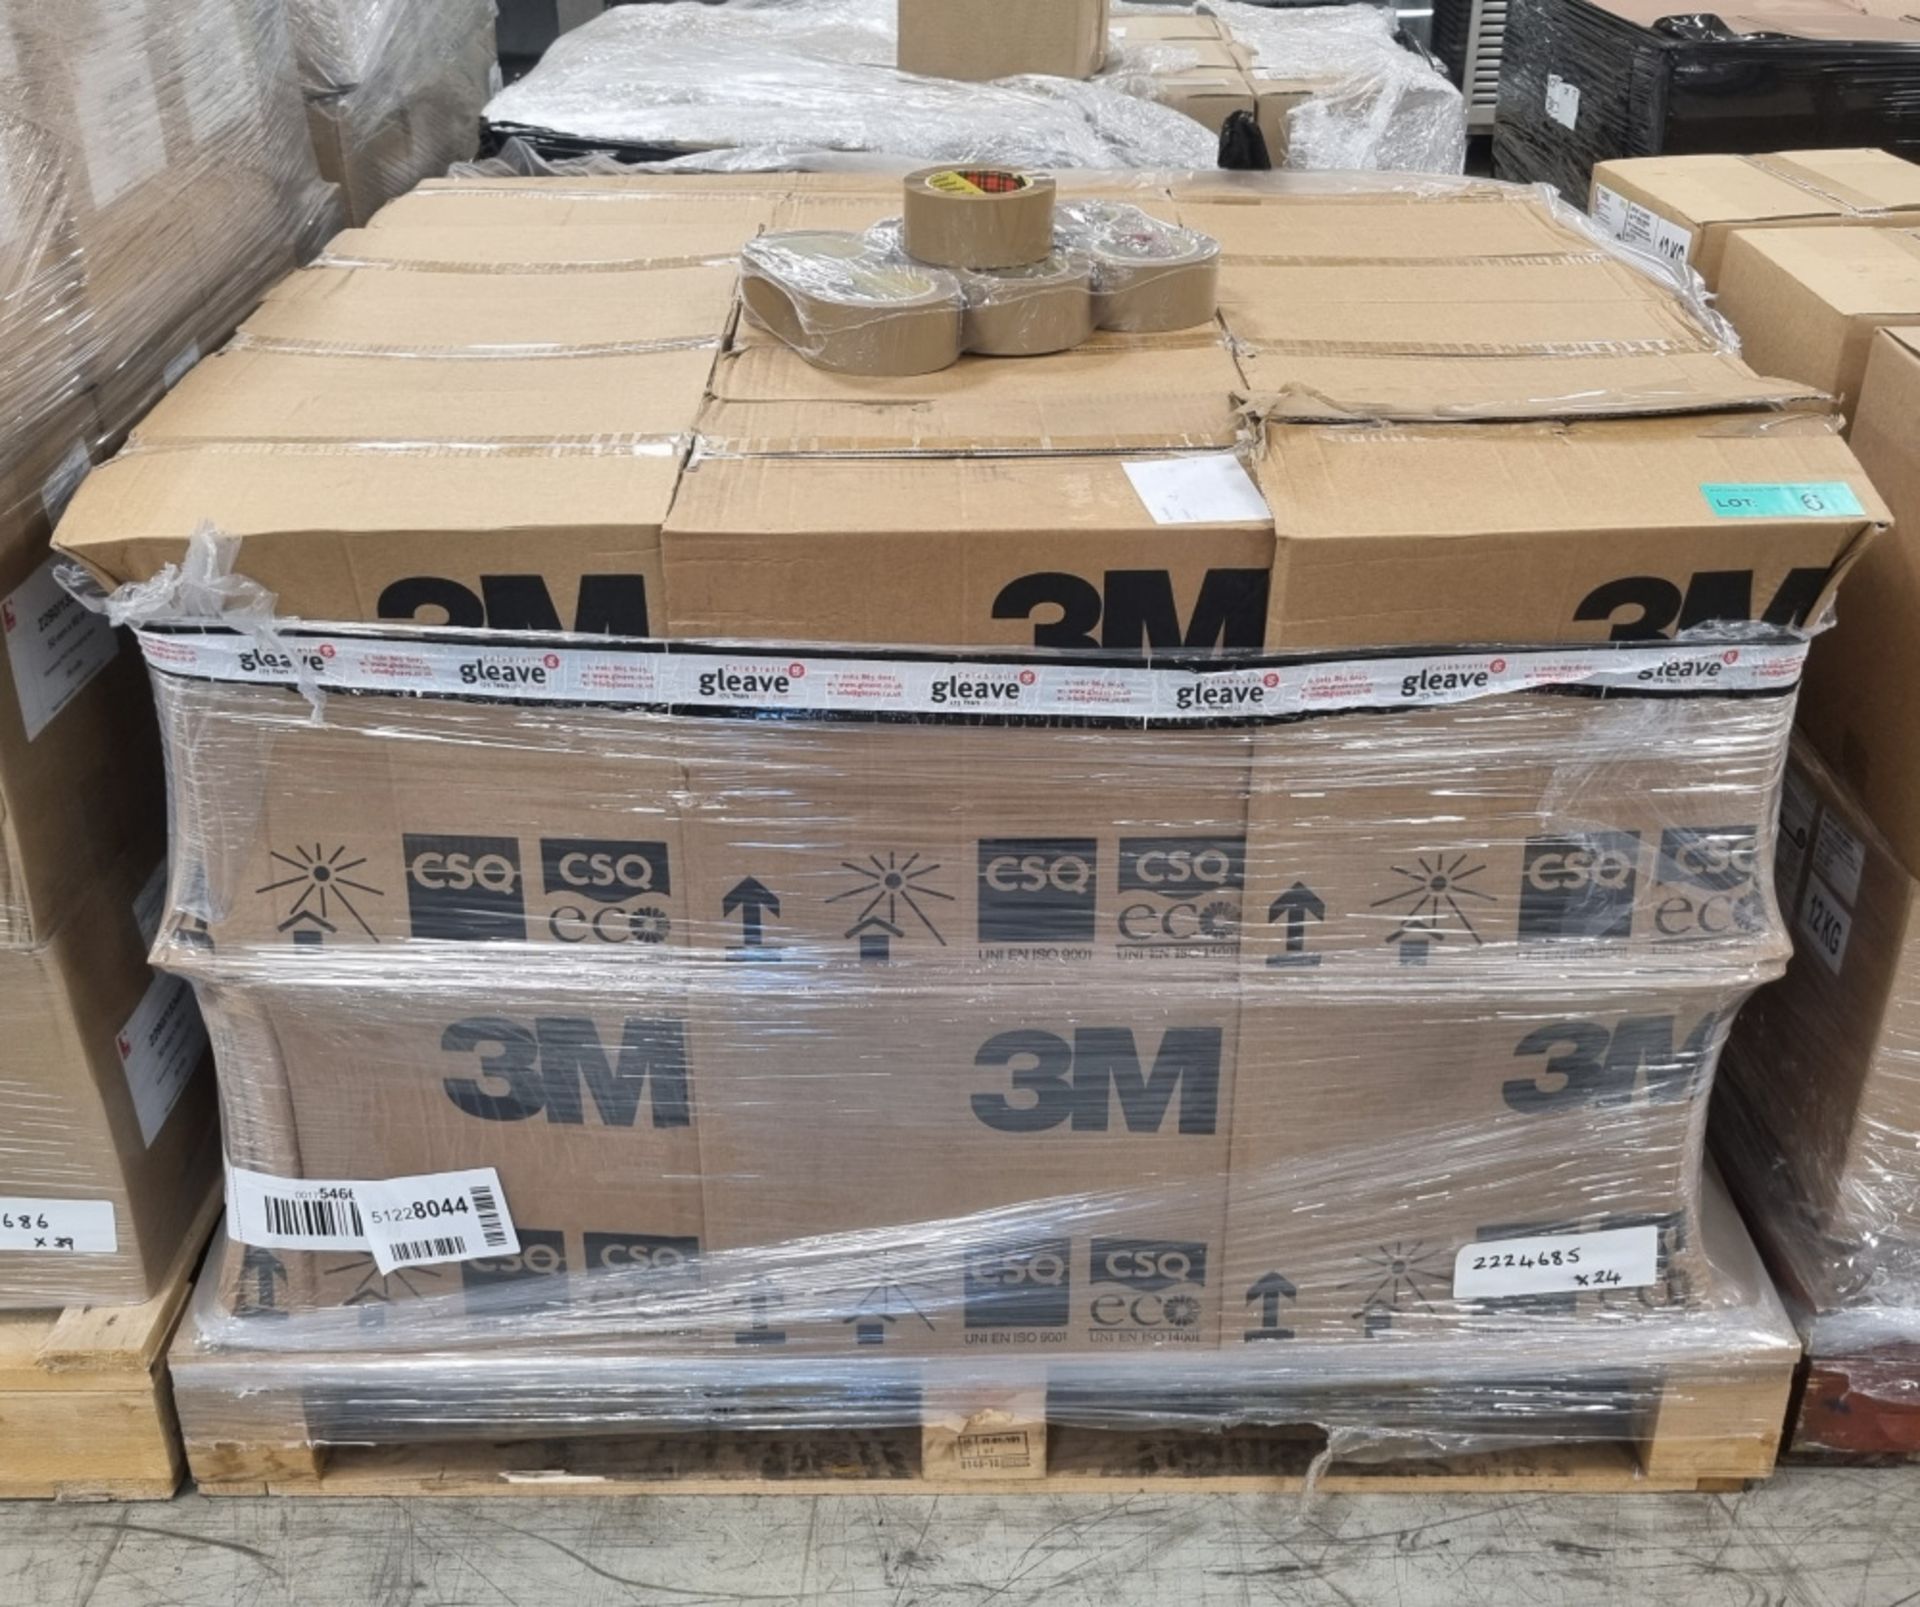 3M Scotch Pressure Sensitive Brown Box Sealing Tape - W50mm x L66m - 36 rolls per box - 24 boxes - Image 5 of 5